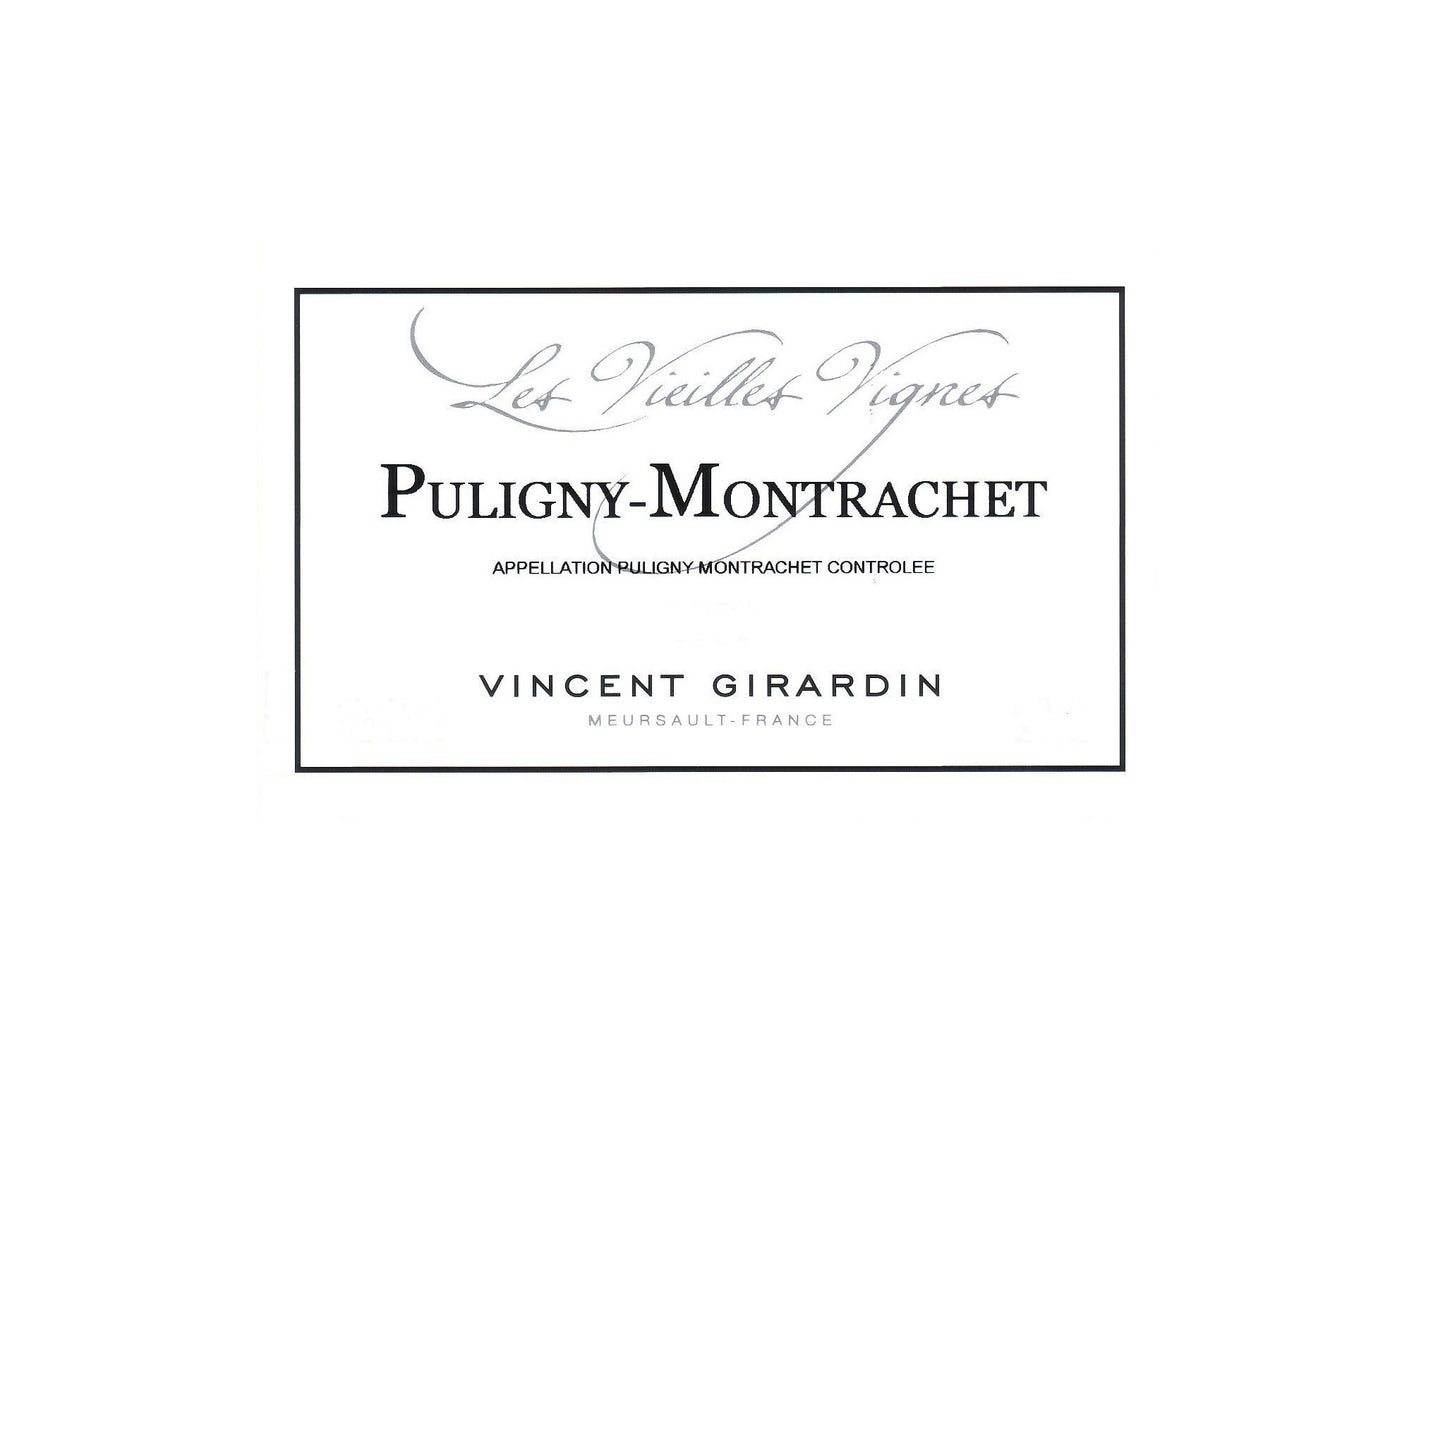 Puligny-Montrachet, Vincent Girardin, 2018